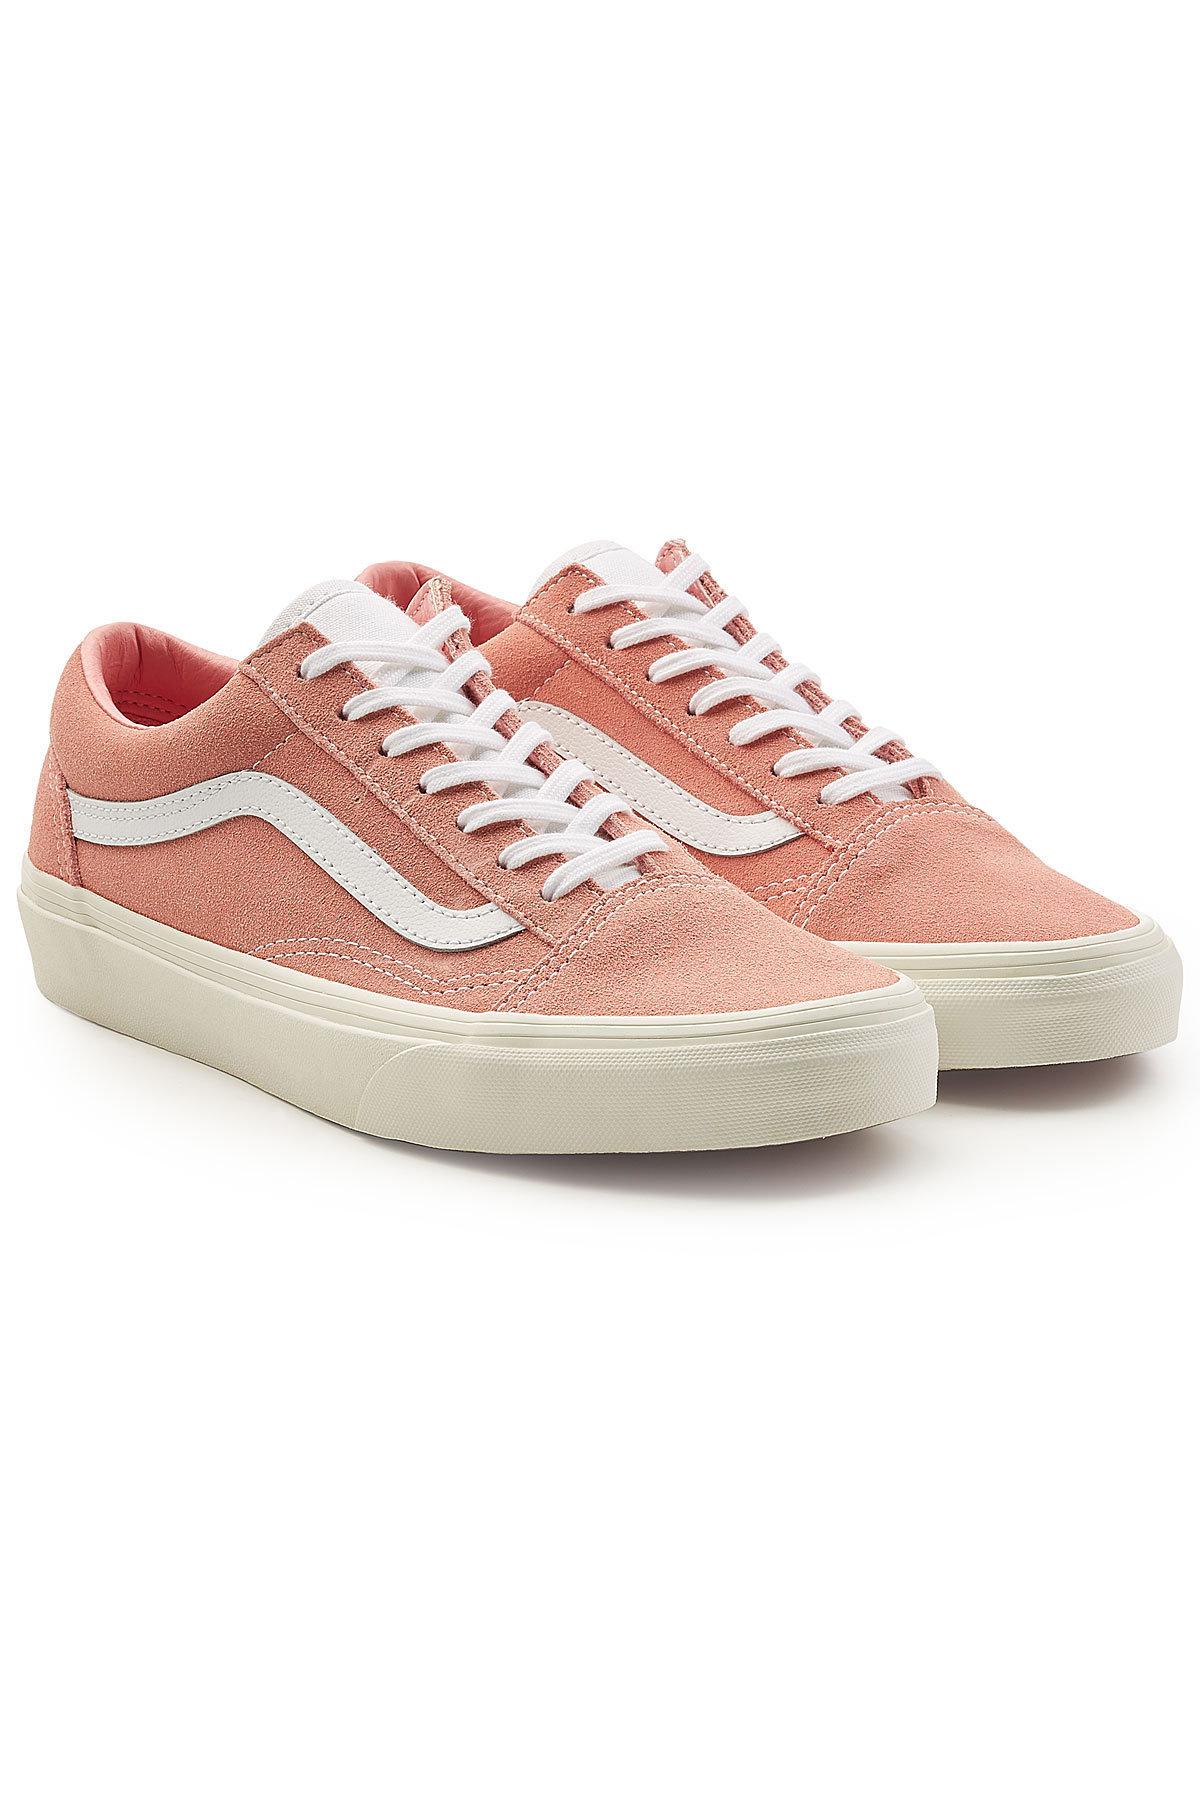 Lyst - Vans Old Skool Suede Sneakers With Leather in Pink